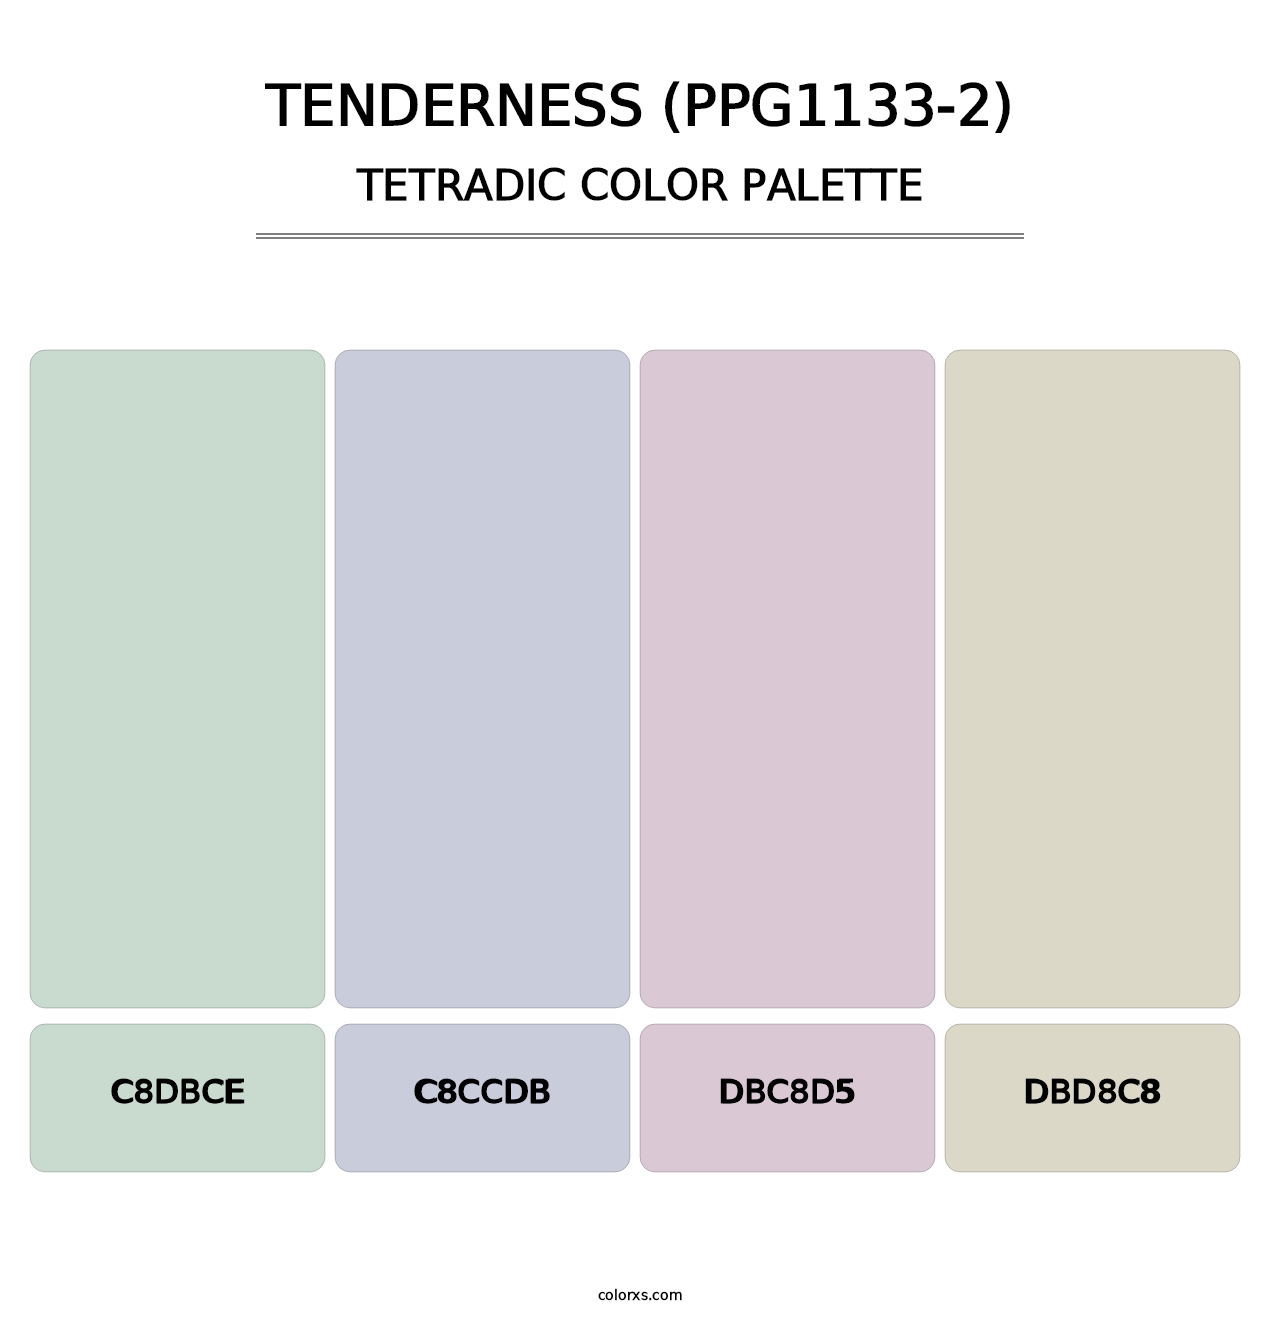 Tenderness (PPG1133-2) - Tetradic Color Palette